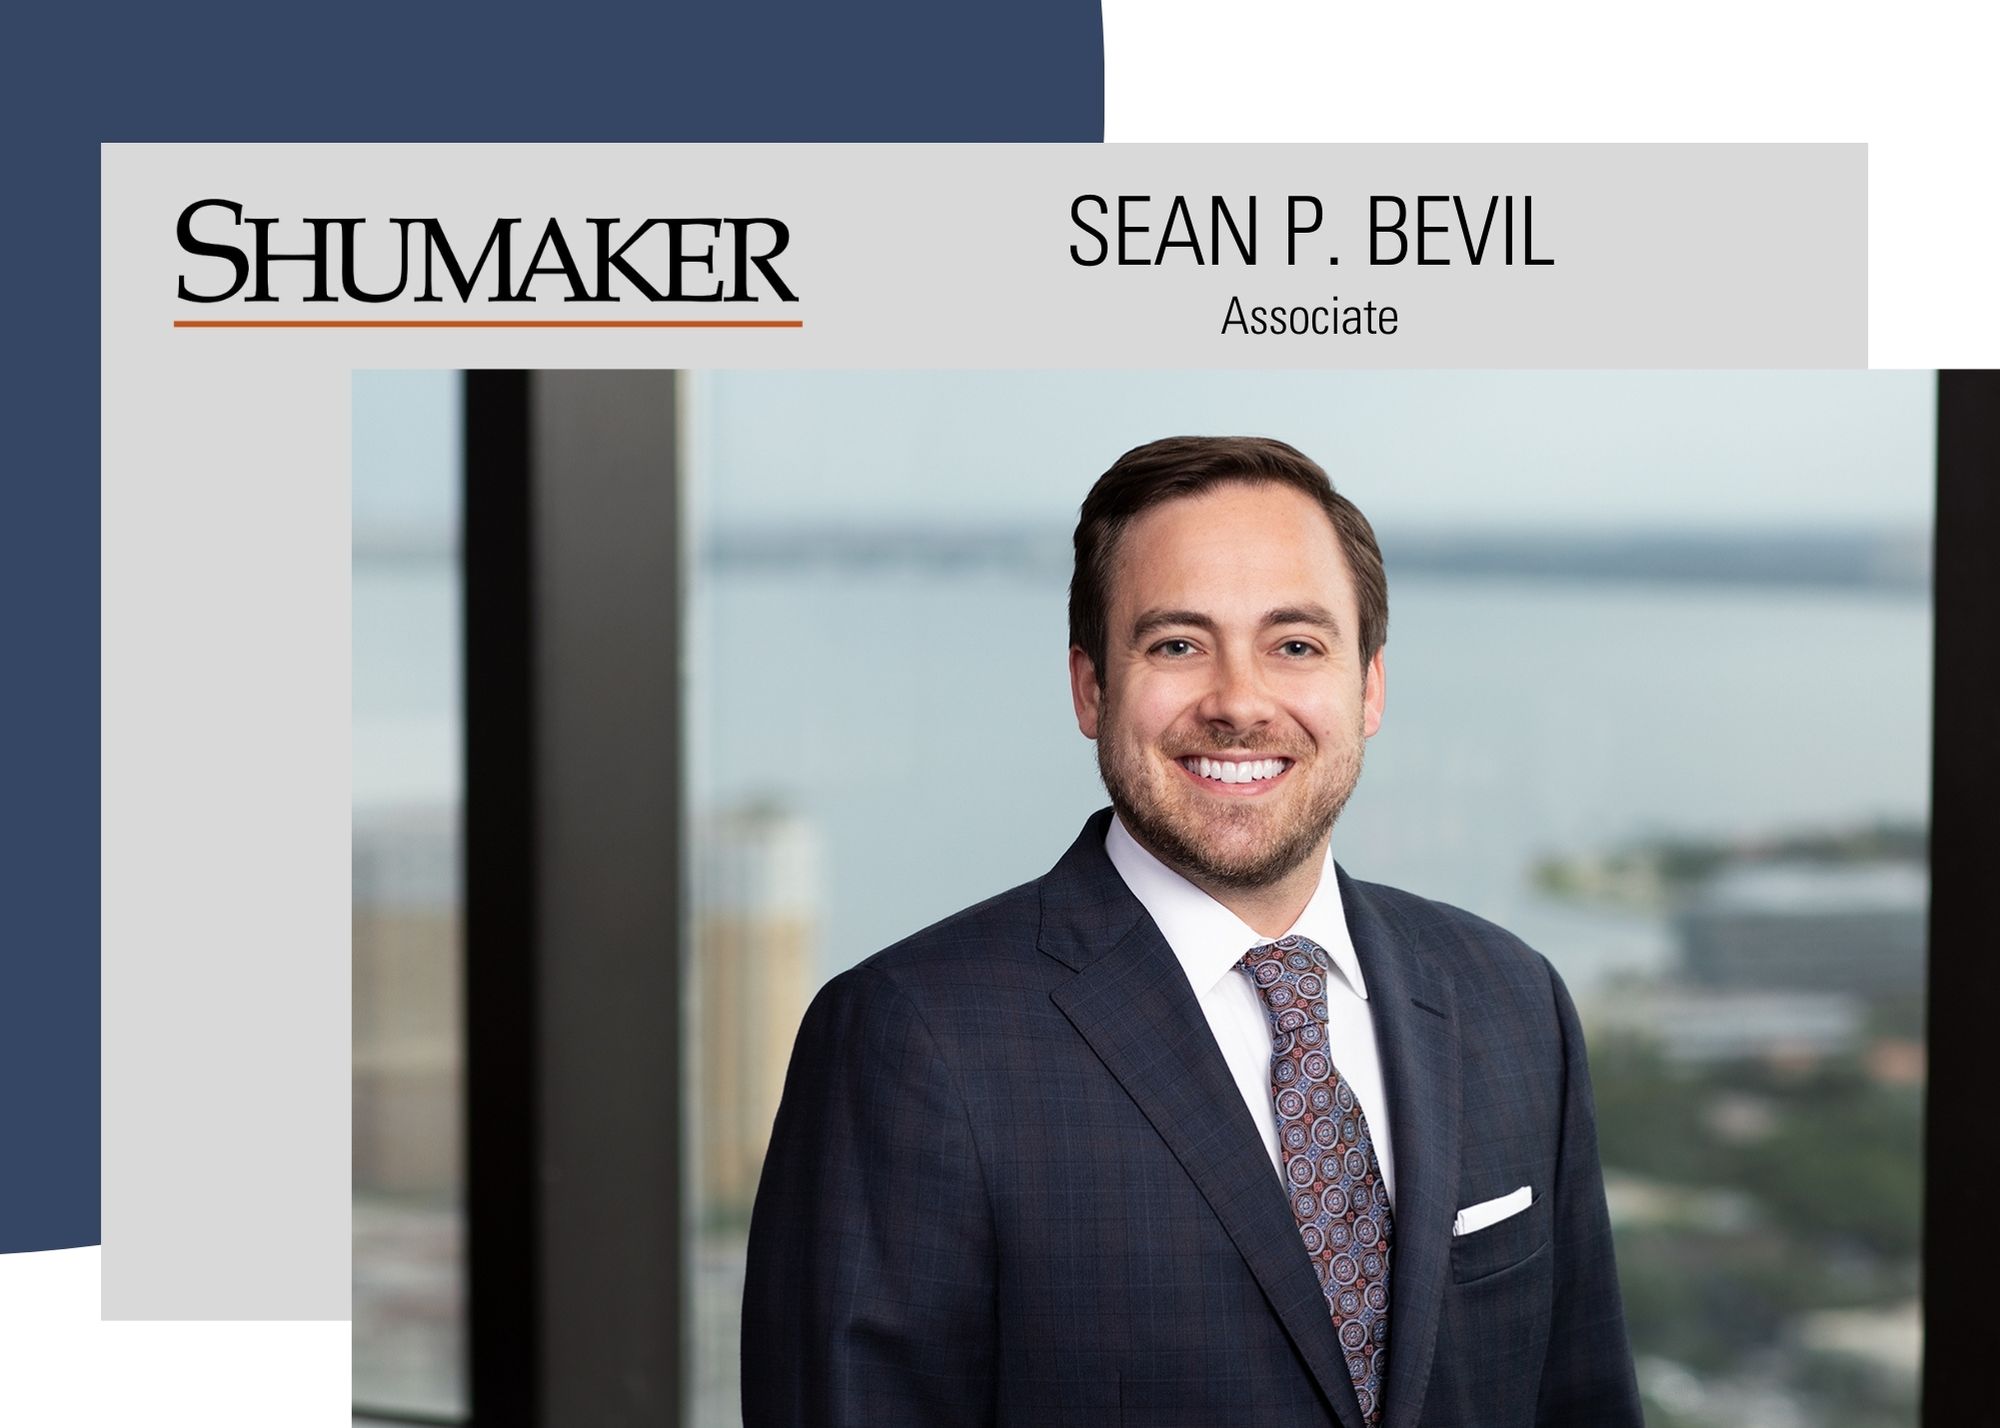 Sean P. Bevil Earns Highest Level of Evaluation in Criminal Trial Law